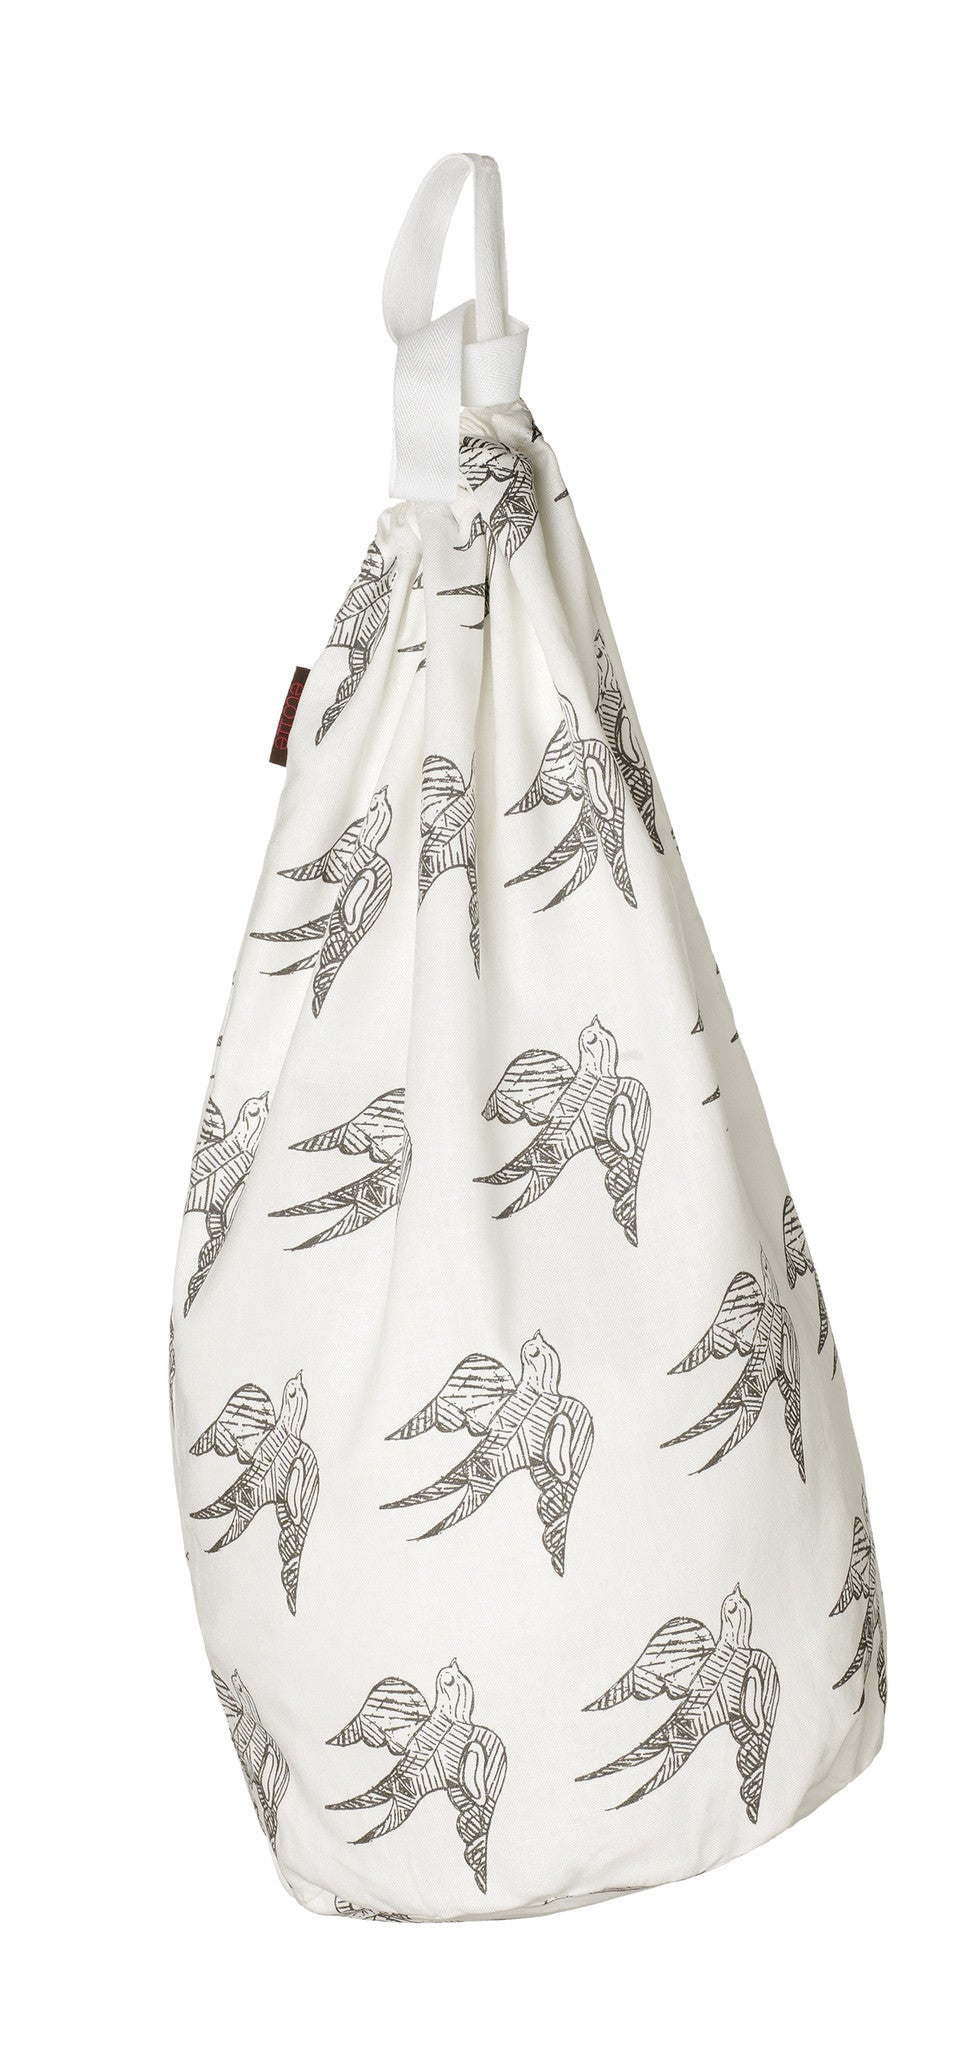 Katia Swallow Bird Pattern Linen Cotton Drawstring Laundry & Storage Bag in Stone Grey ships from Canada (USA)